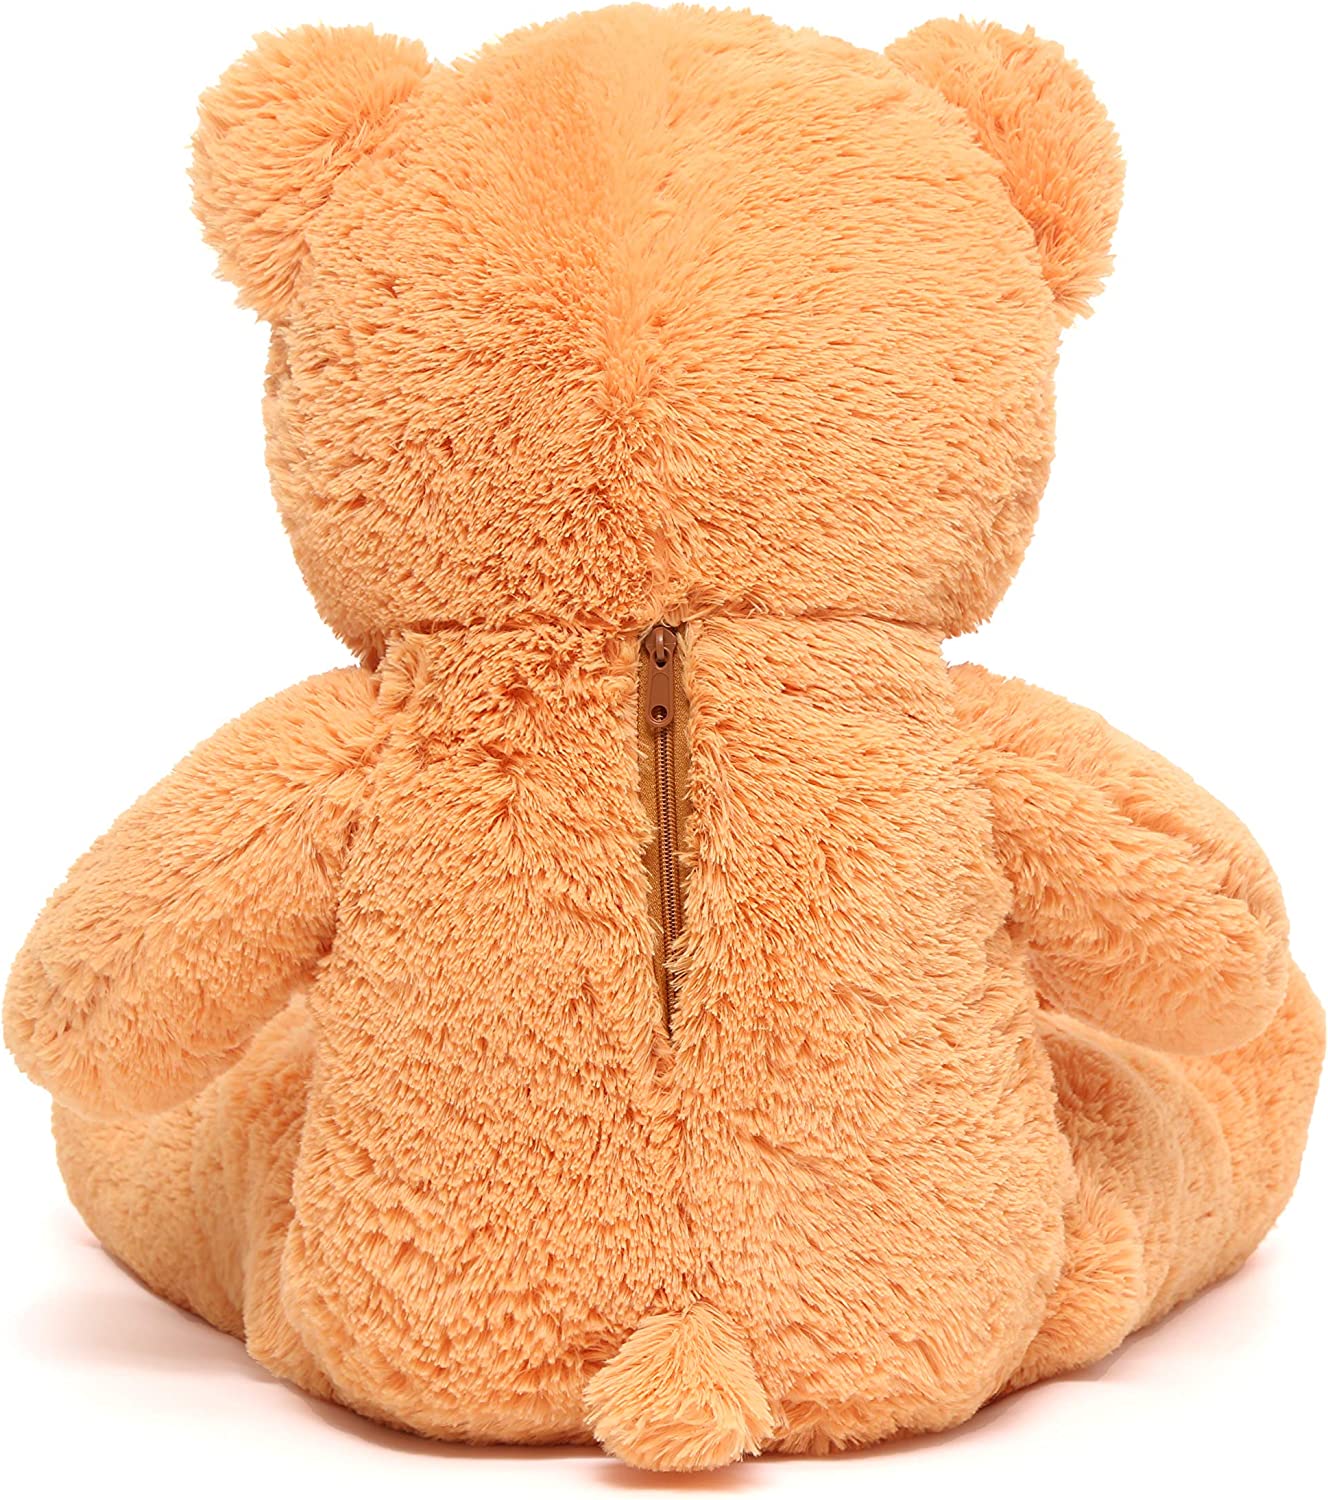 Giant Teddy Bear Plush Toy, Orange, 47 Inches